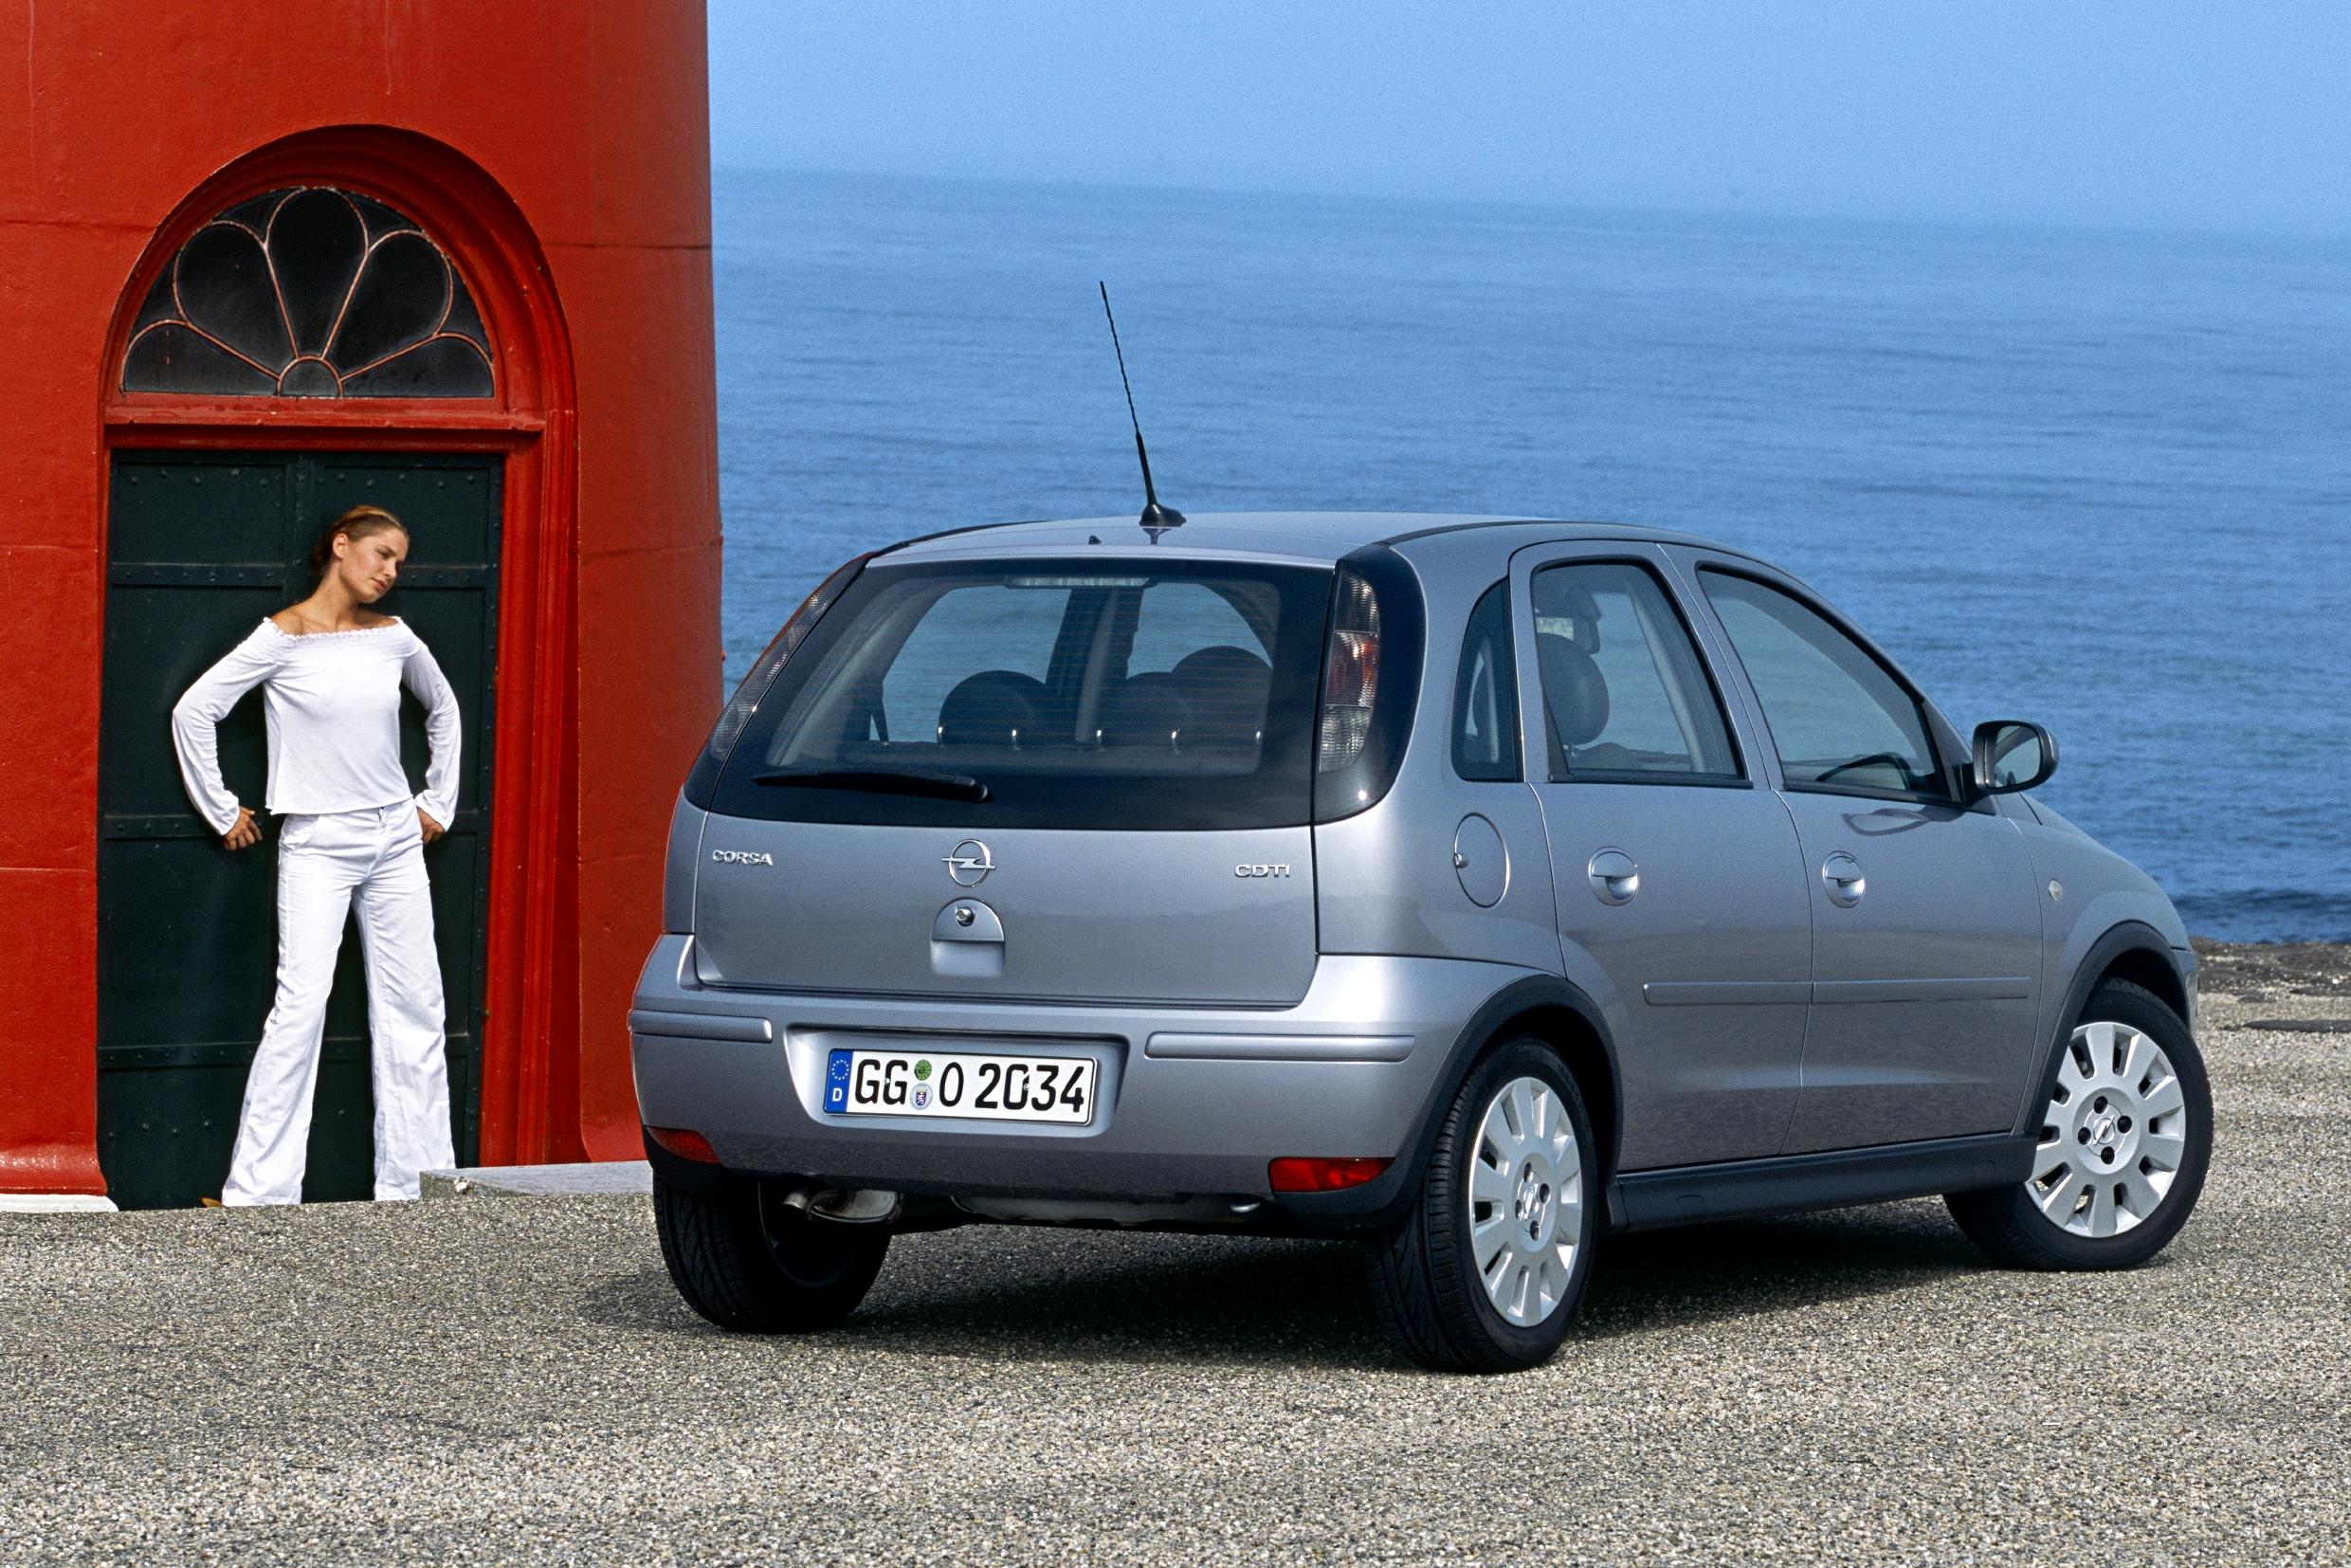 Opel corsa 1.0. Opel Corsa 2003. Opel Corsa 1.2 2003. Opel Corsa c 1.2 2002. Opel Corsa c 2003.